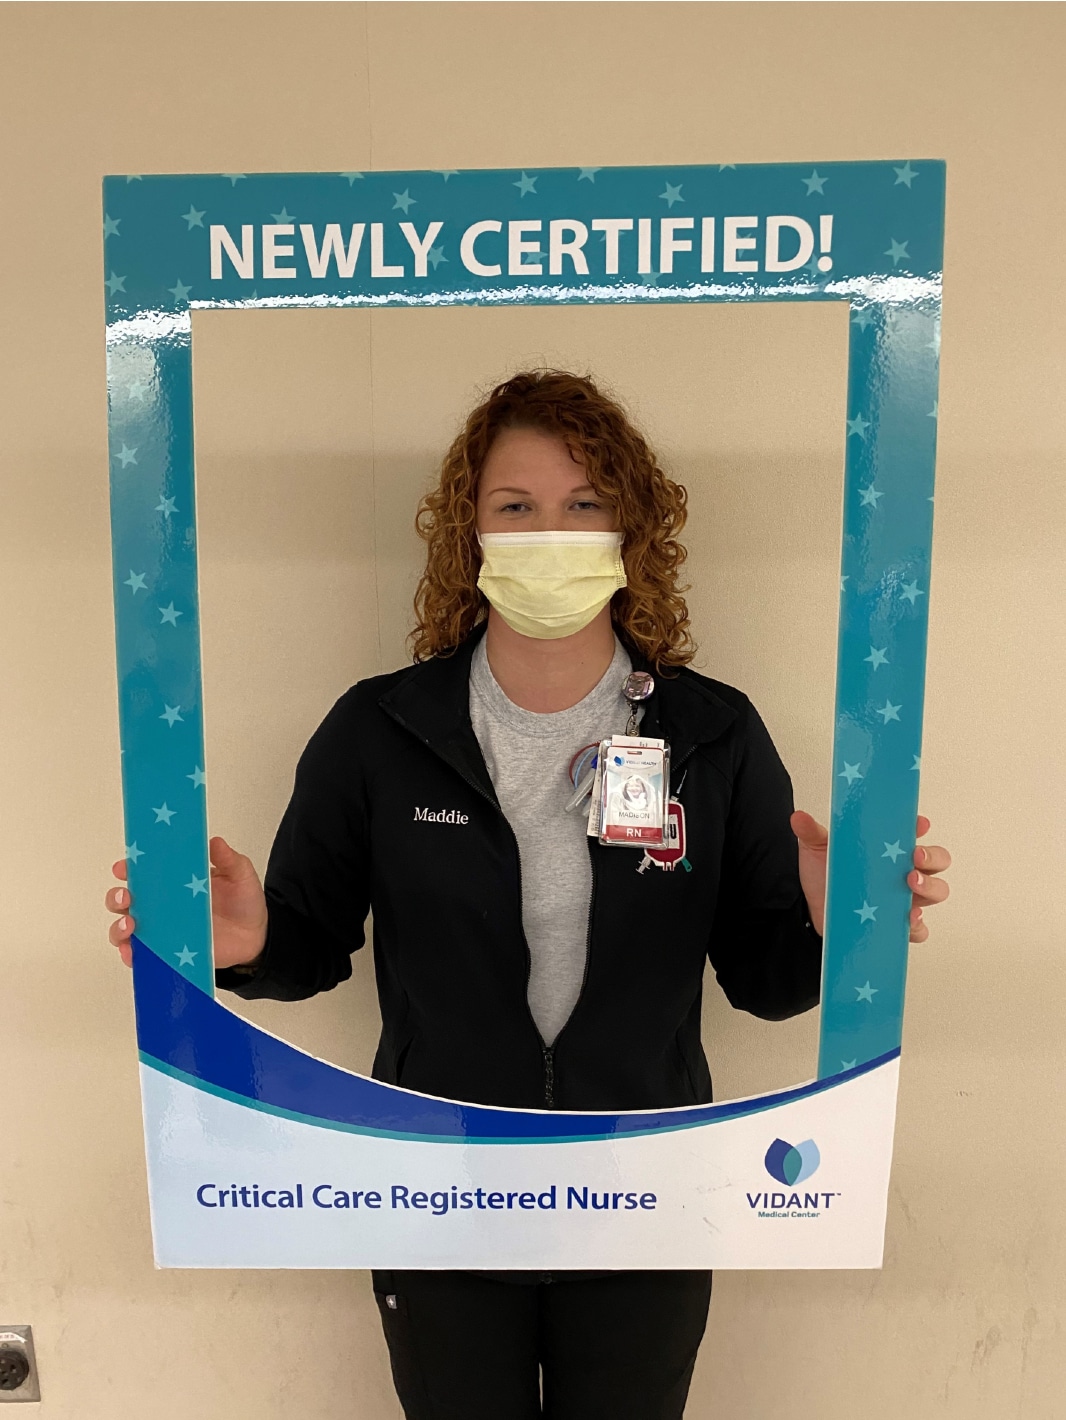 Madison received a nursing certification